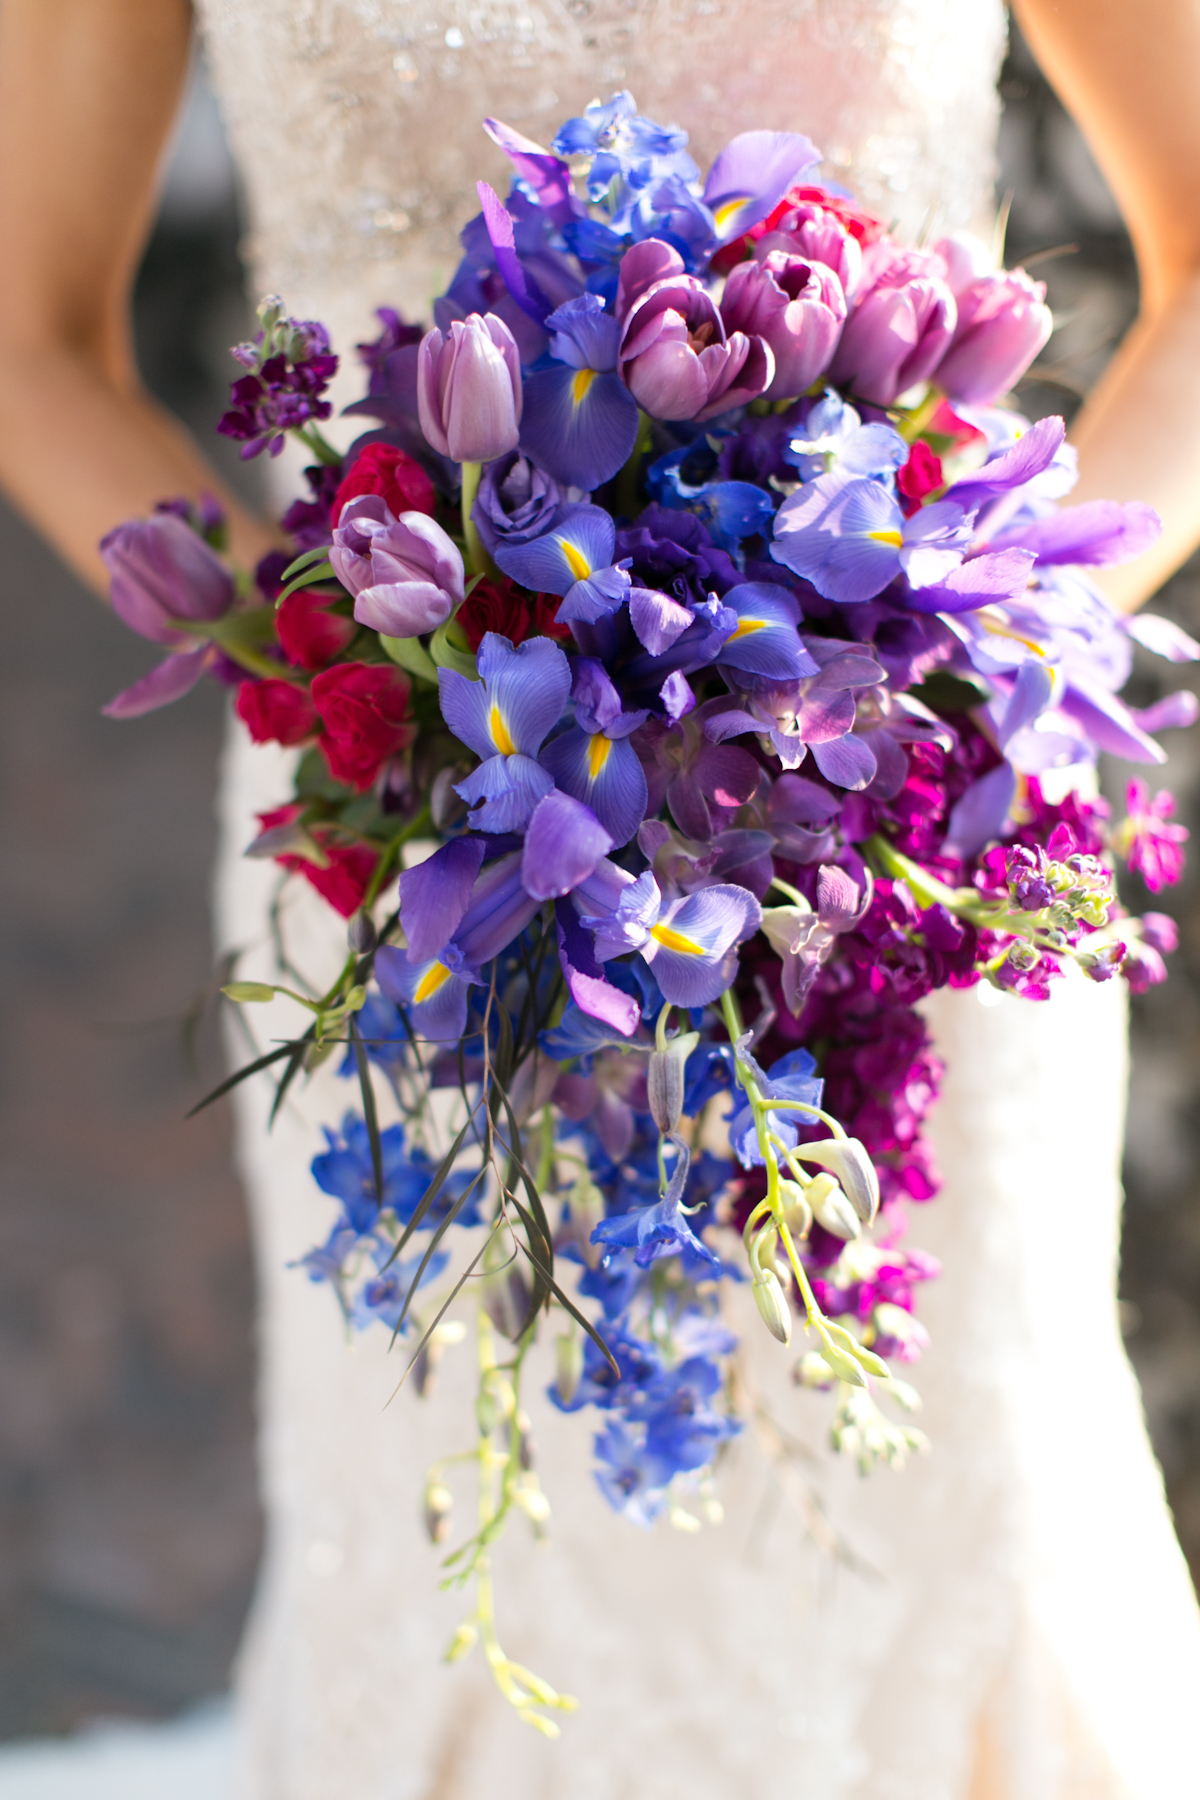 Bride with Blue Flower Bouquet at Wedding - Belle Fiori